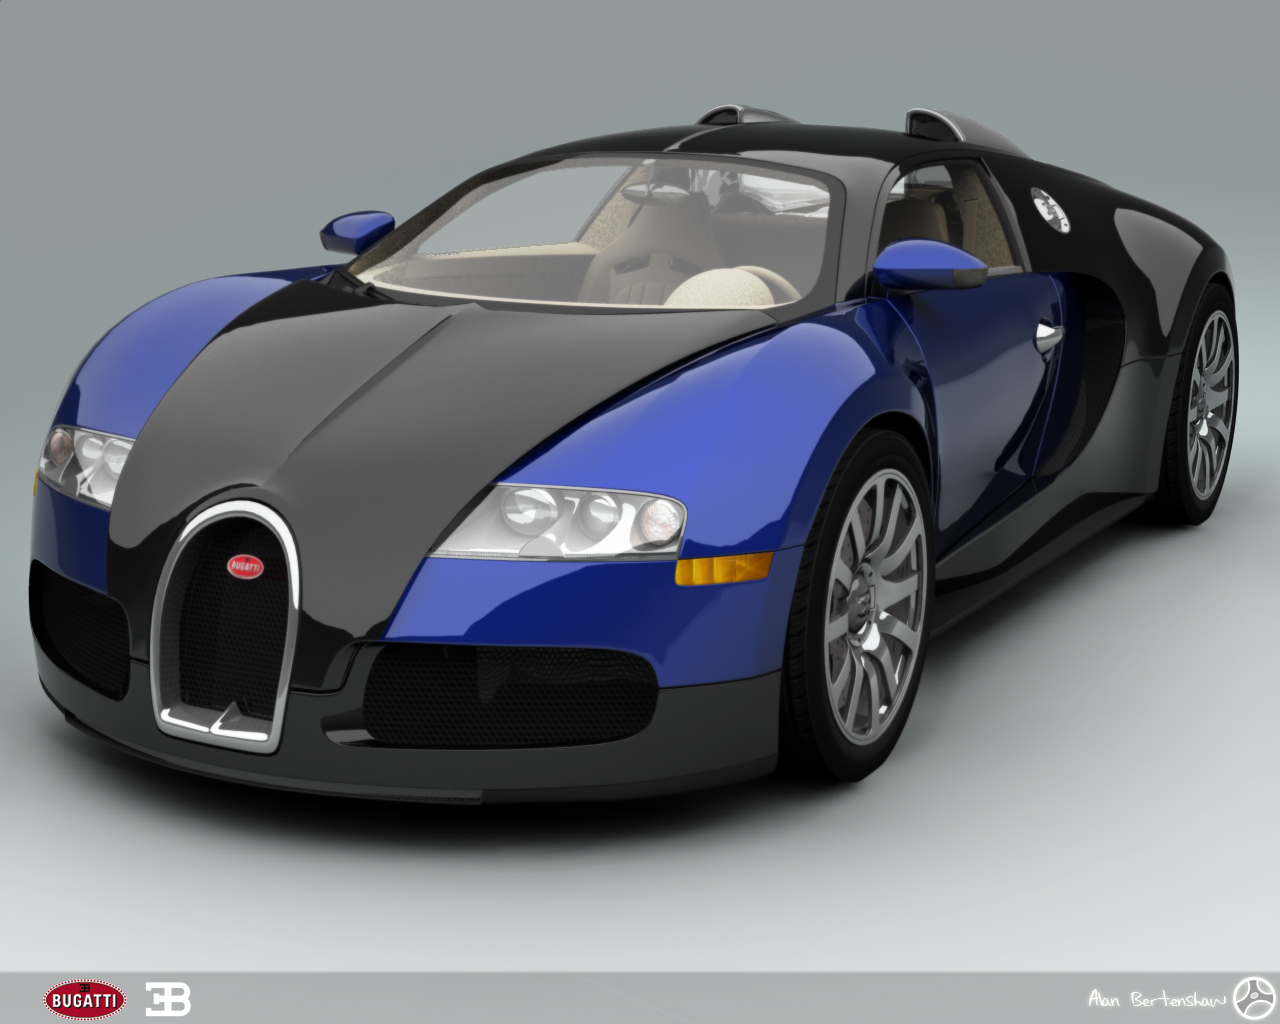 Kumpulan Foto Bugatti Terbaru Gambar Mobil Mewah Super Cars